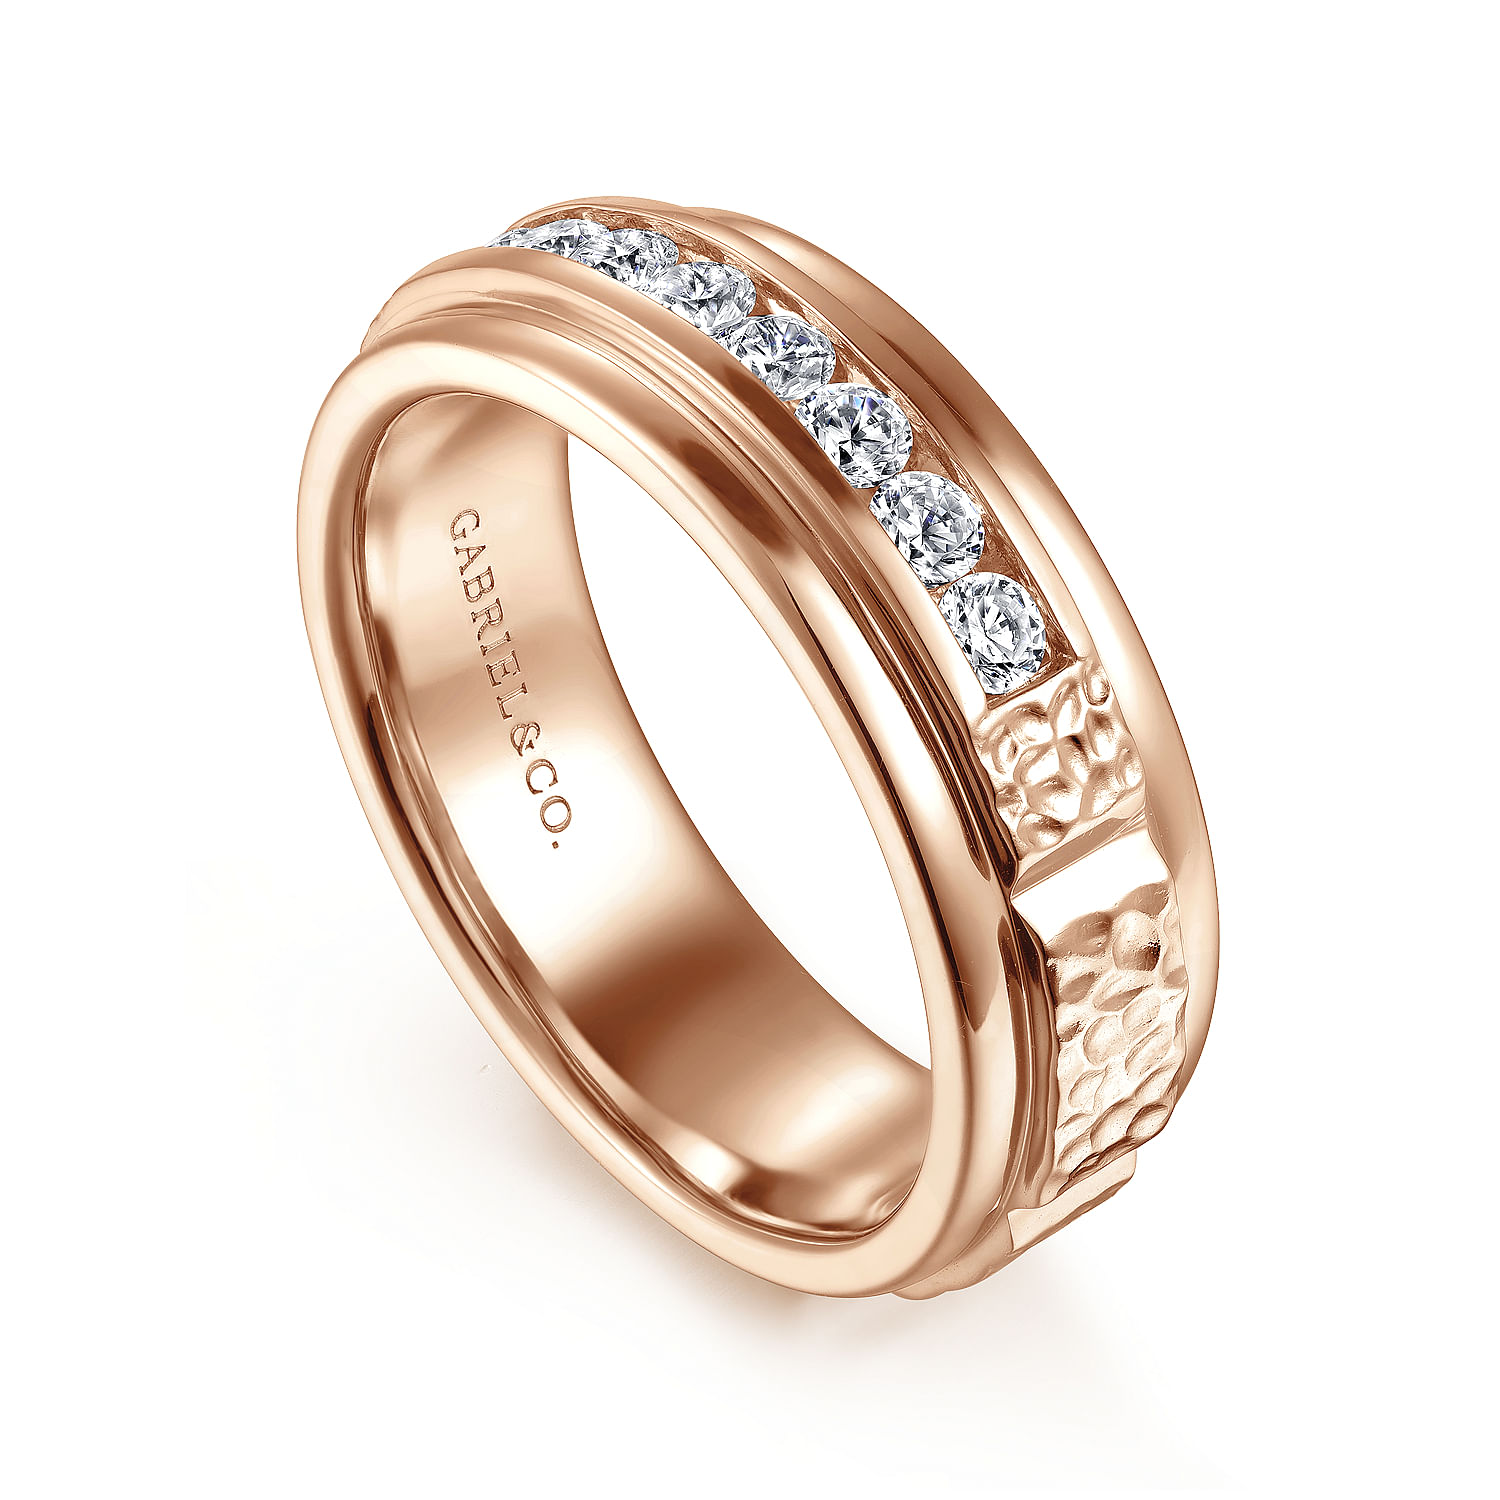 14K Rose Gold Diamond Men's Wedding Ring in Sand Blast Finish